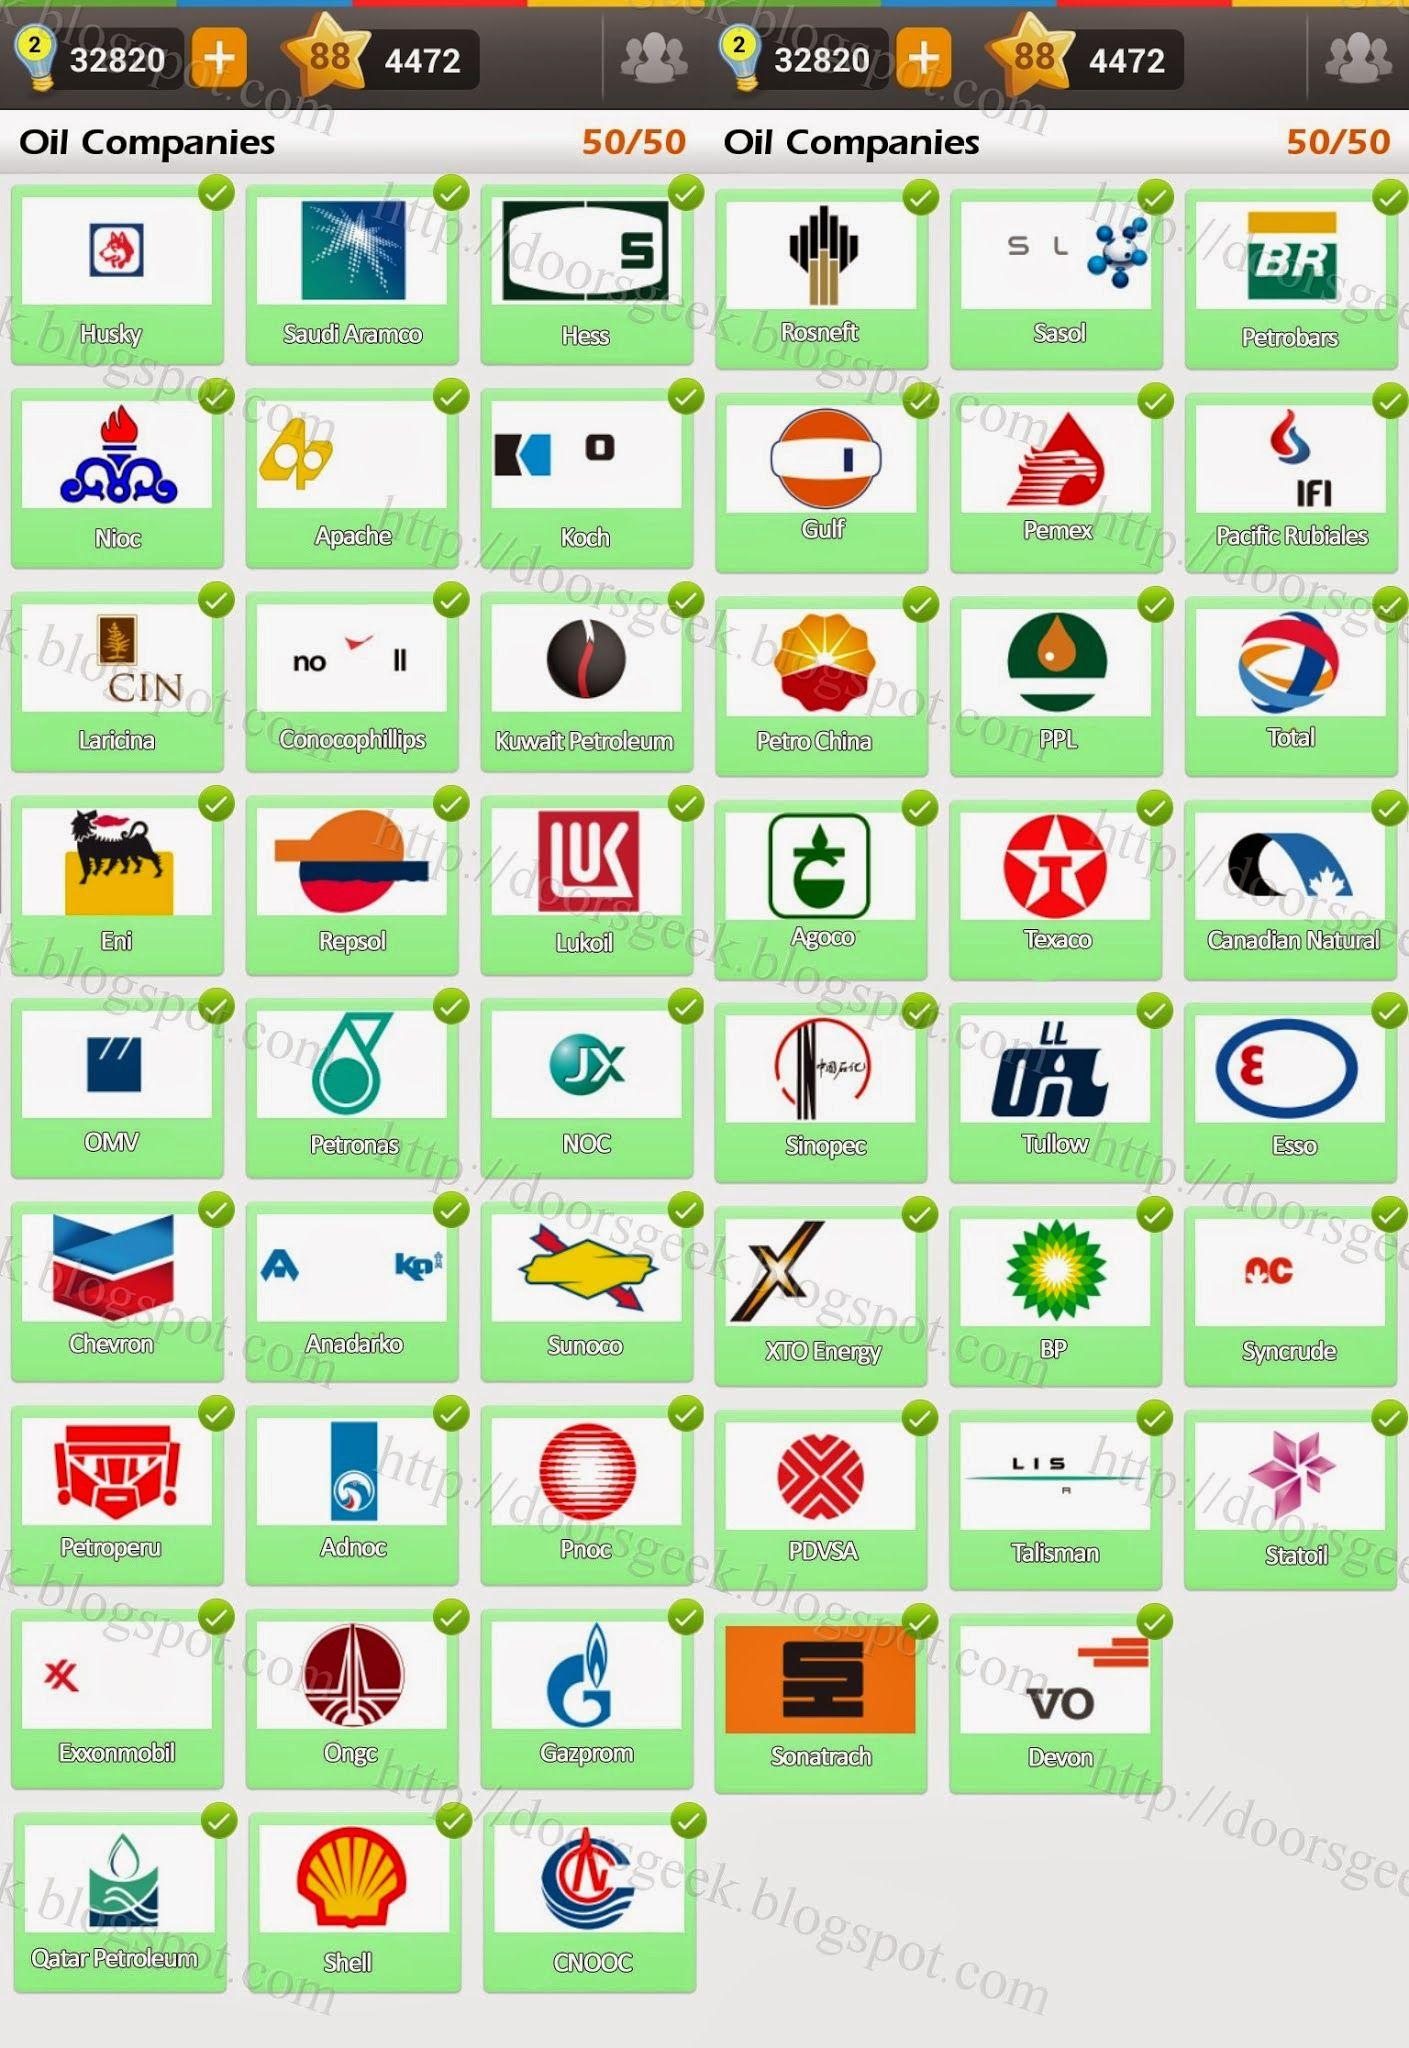 Oil Company Logo - Logo Game: Guess the Brand [Bonus] Oil Companies ~ Doors Geek